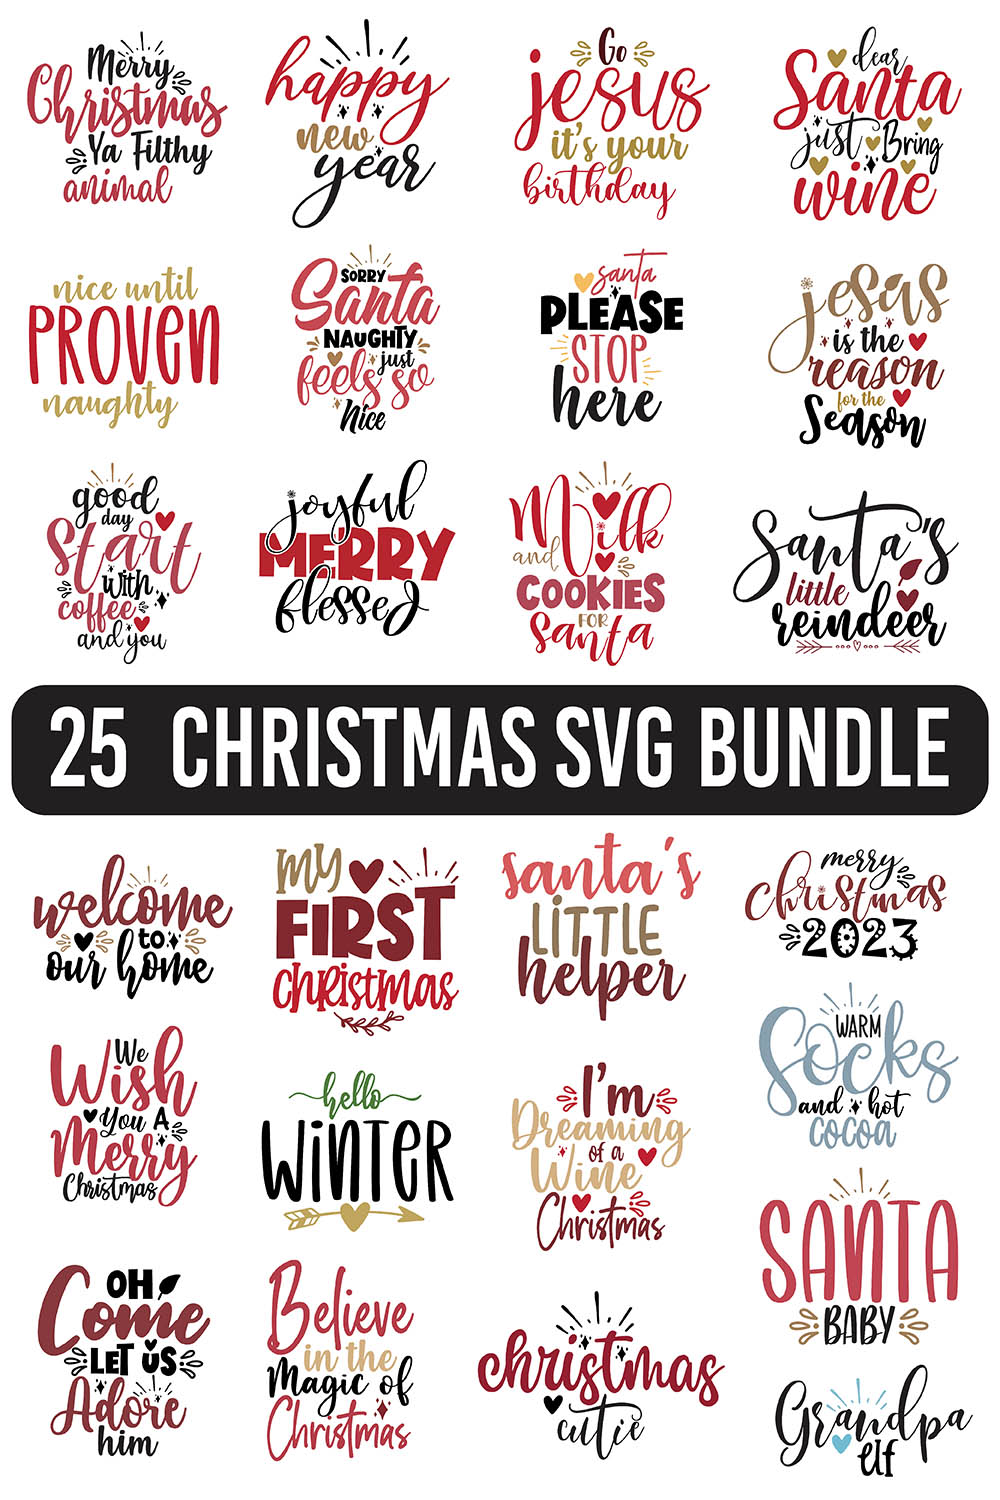 25 Christmas SVG Bundle - pinterest image preview.